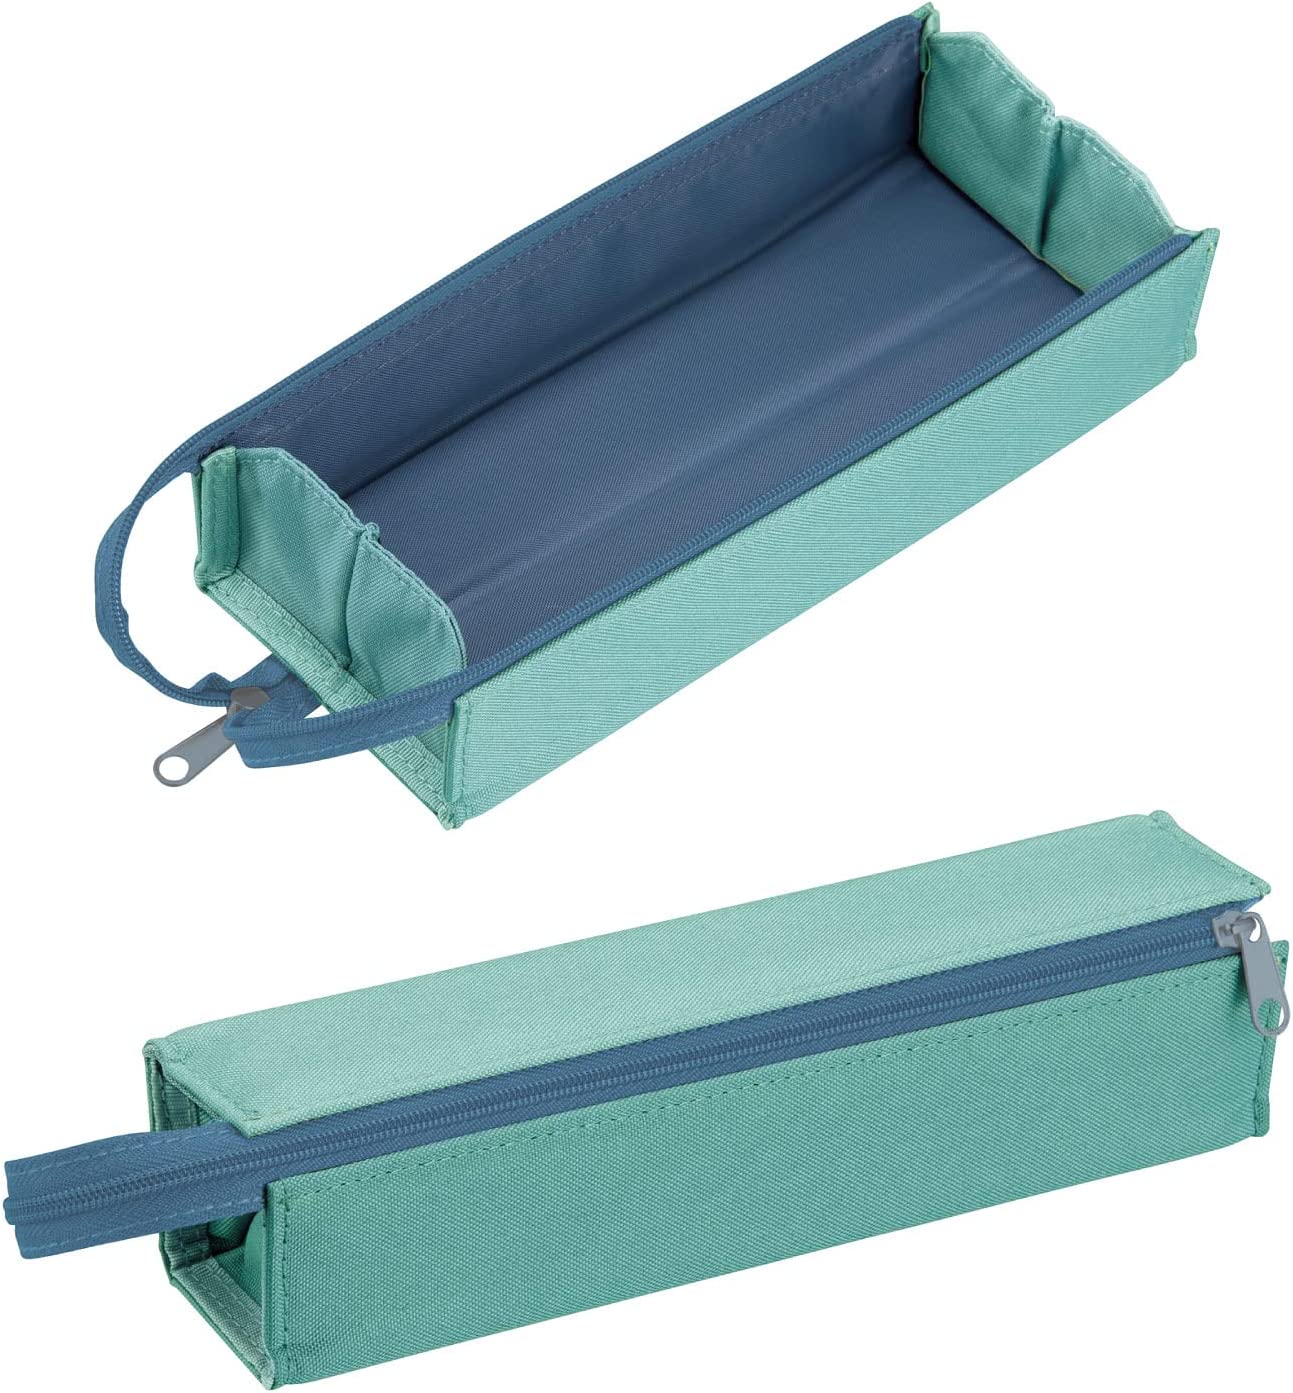 Kokuyo C2 Tray Type Pencil Case - Slim - Violet Blue